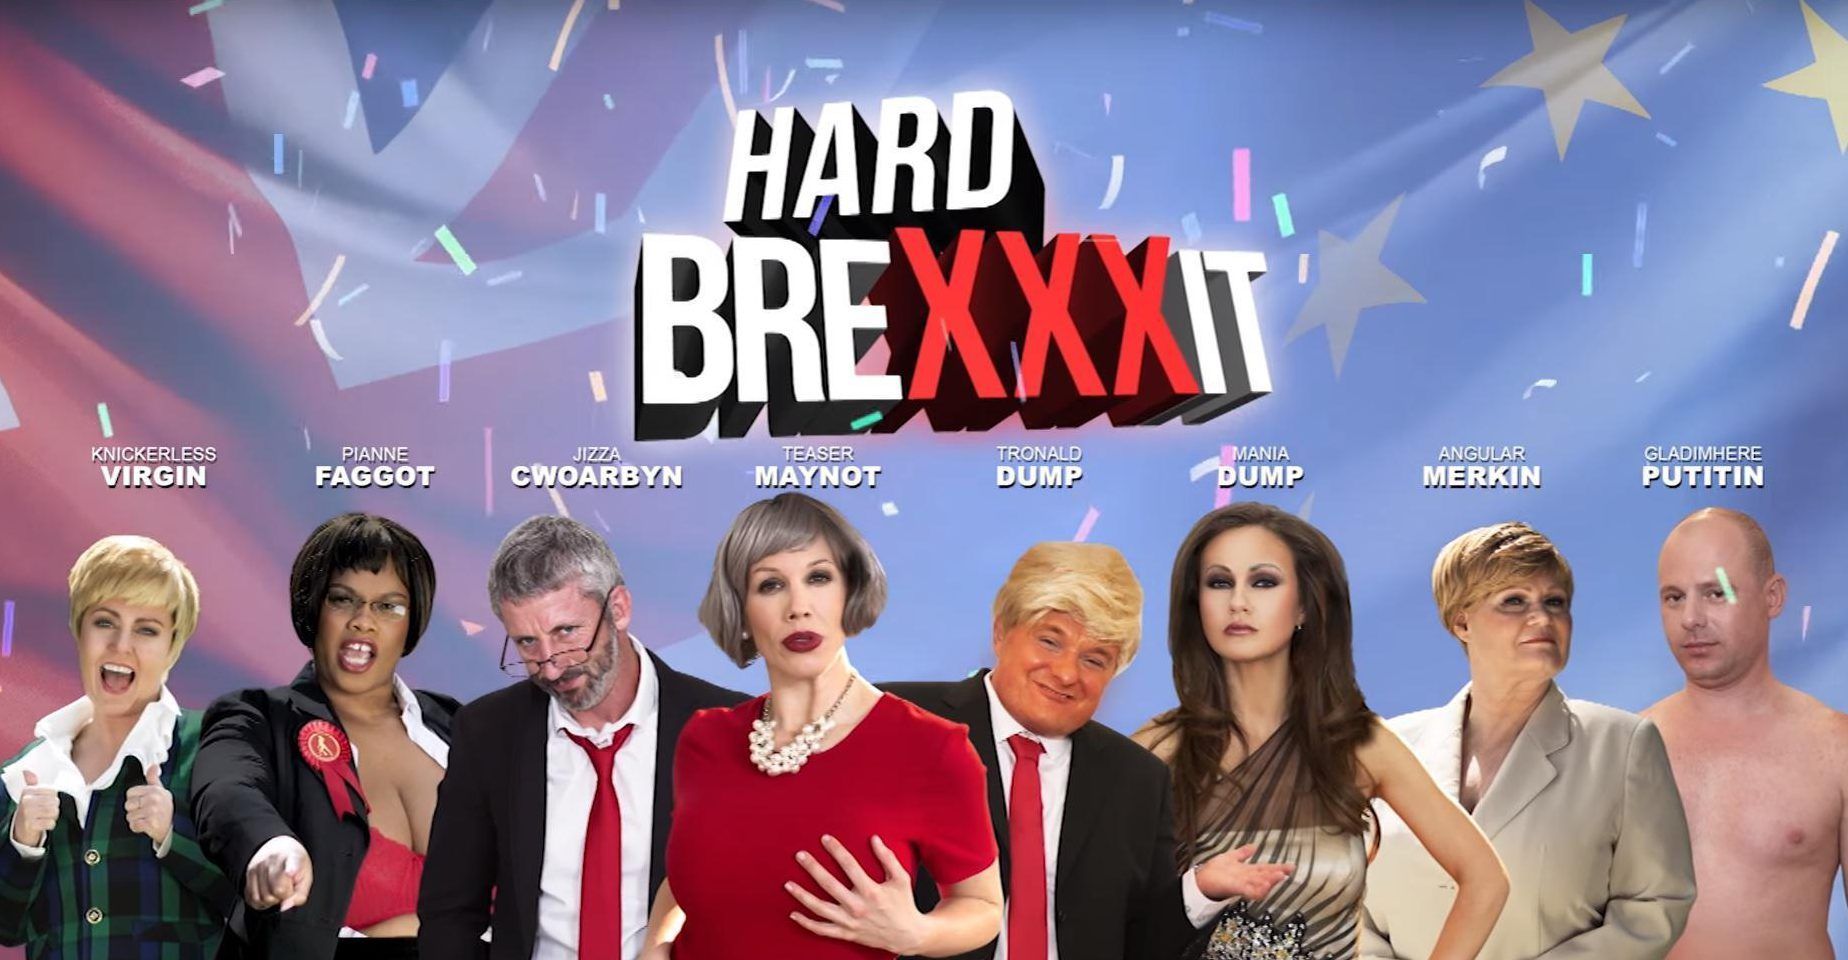 King o. A. reccomend british parody hard brexxxit